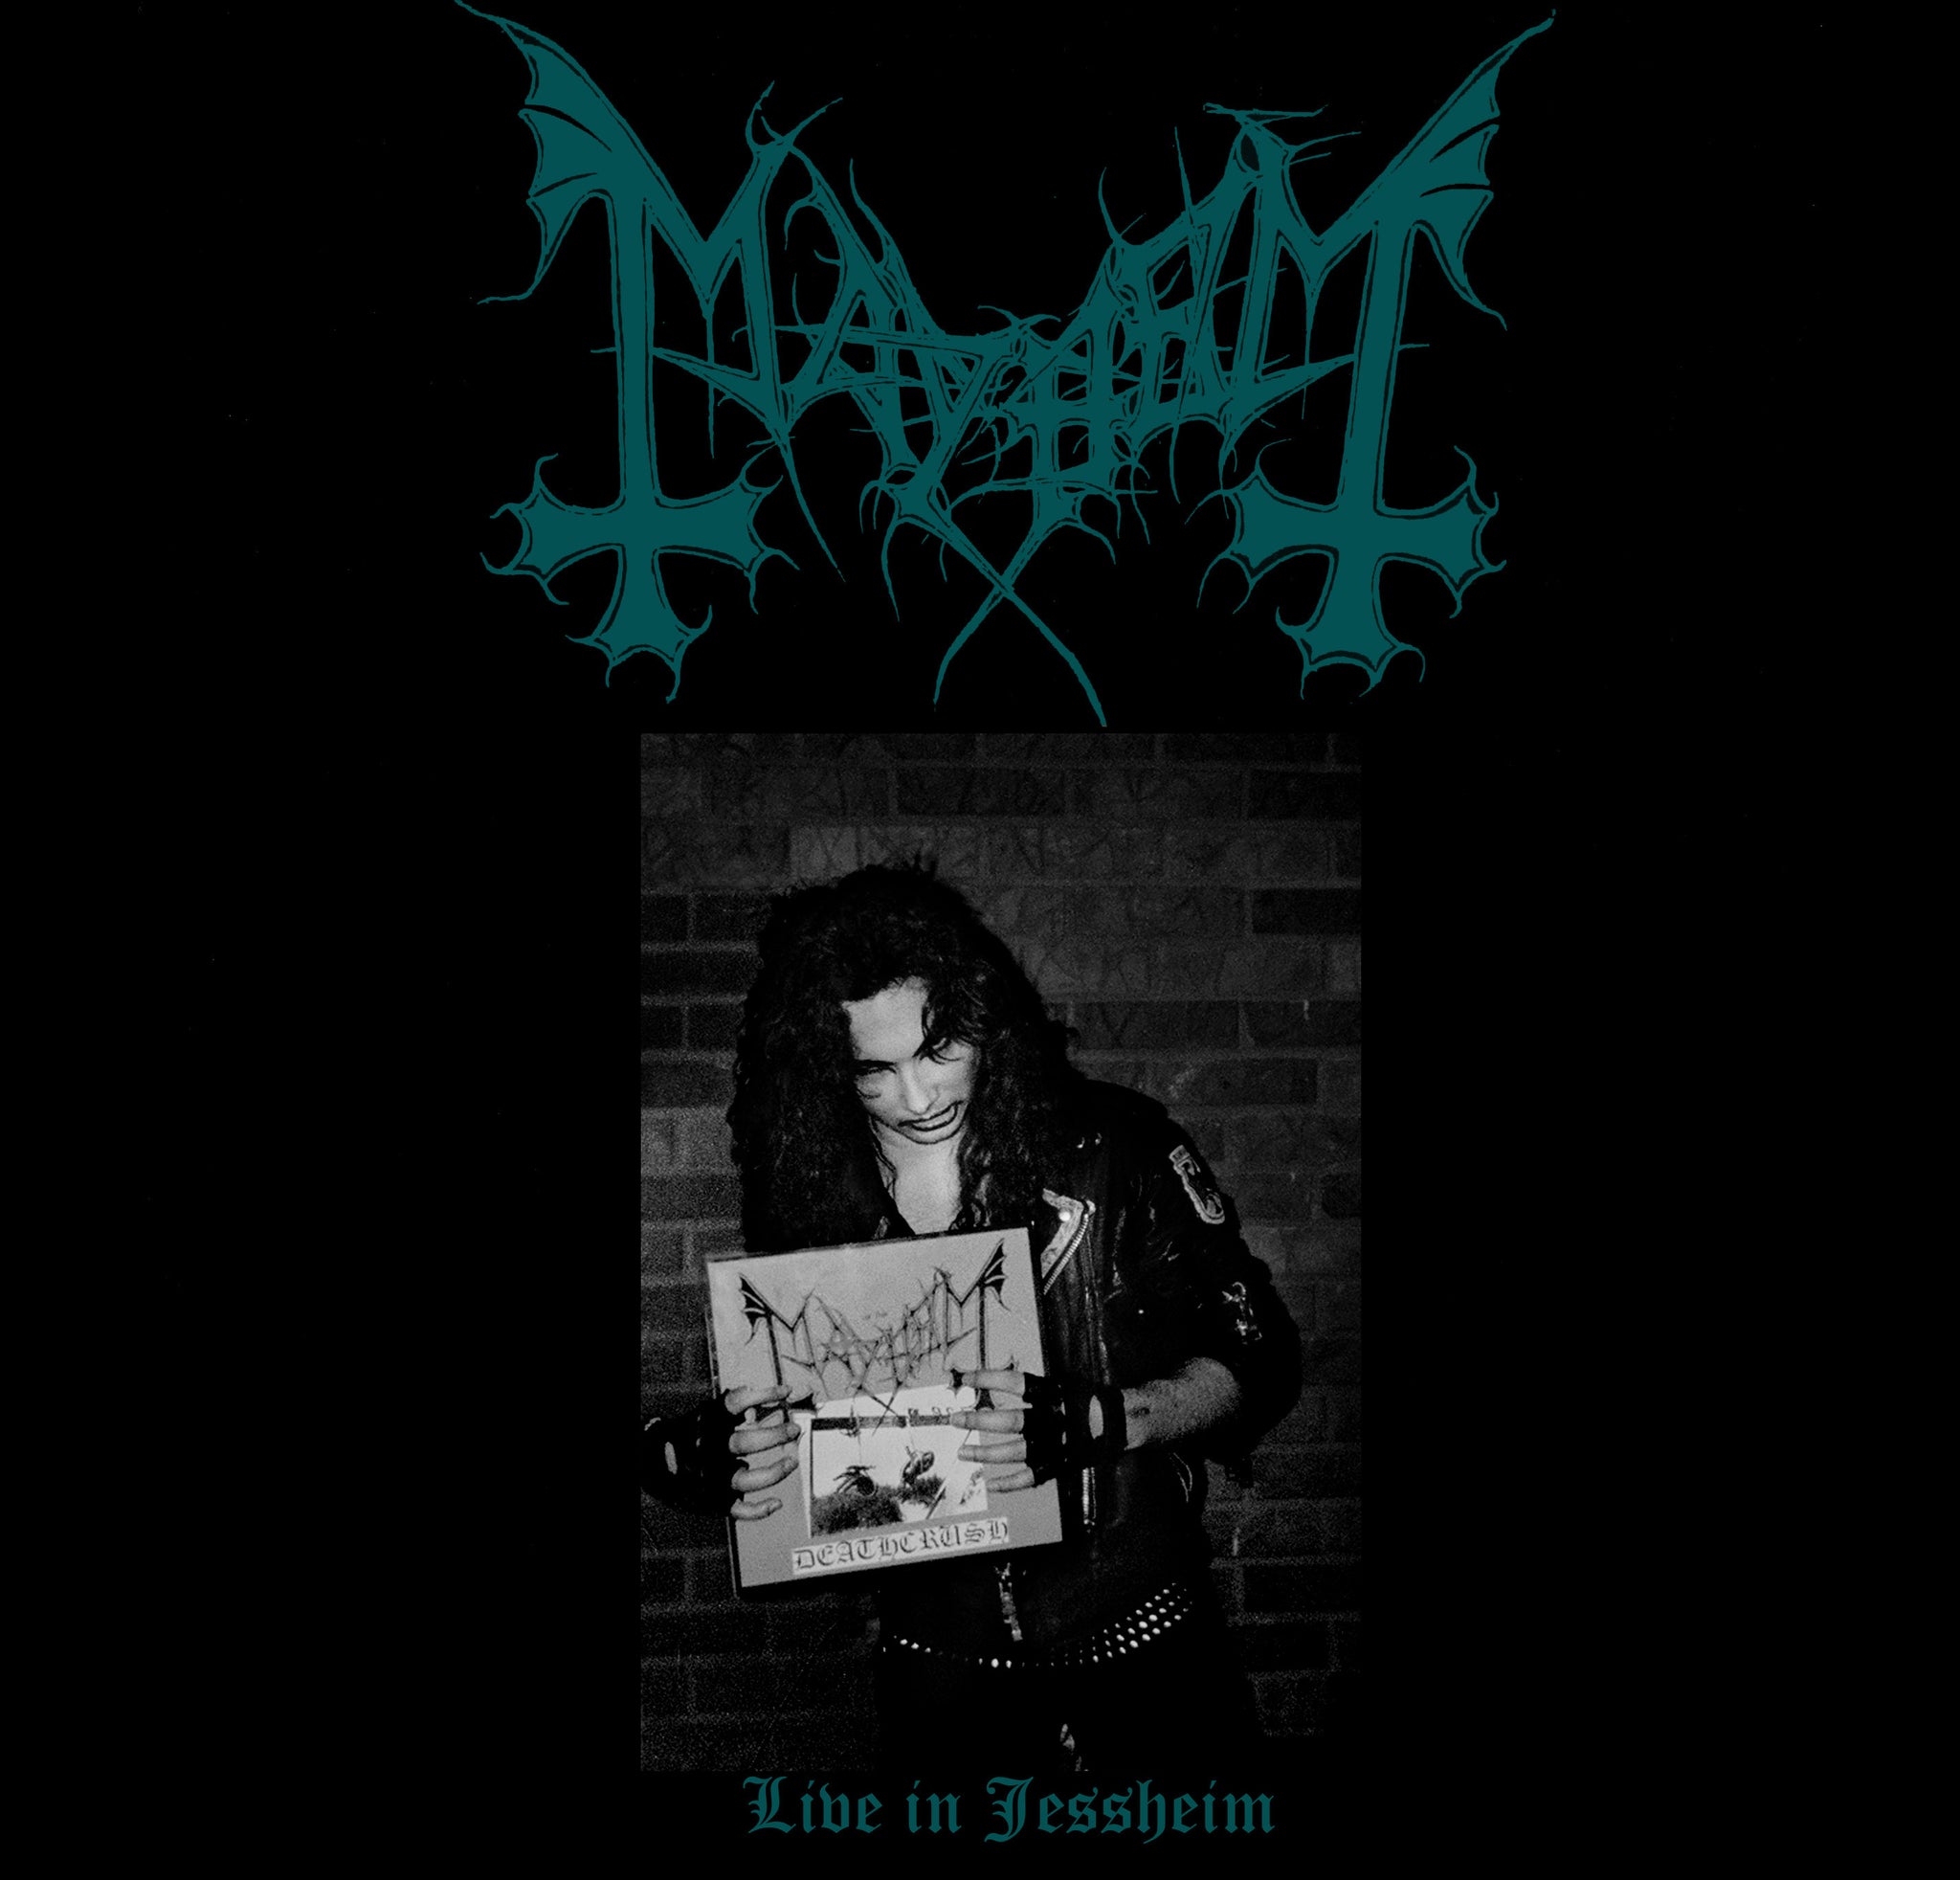 Mayhem "Live In Jessheim" CD/DVD